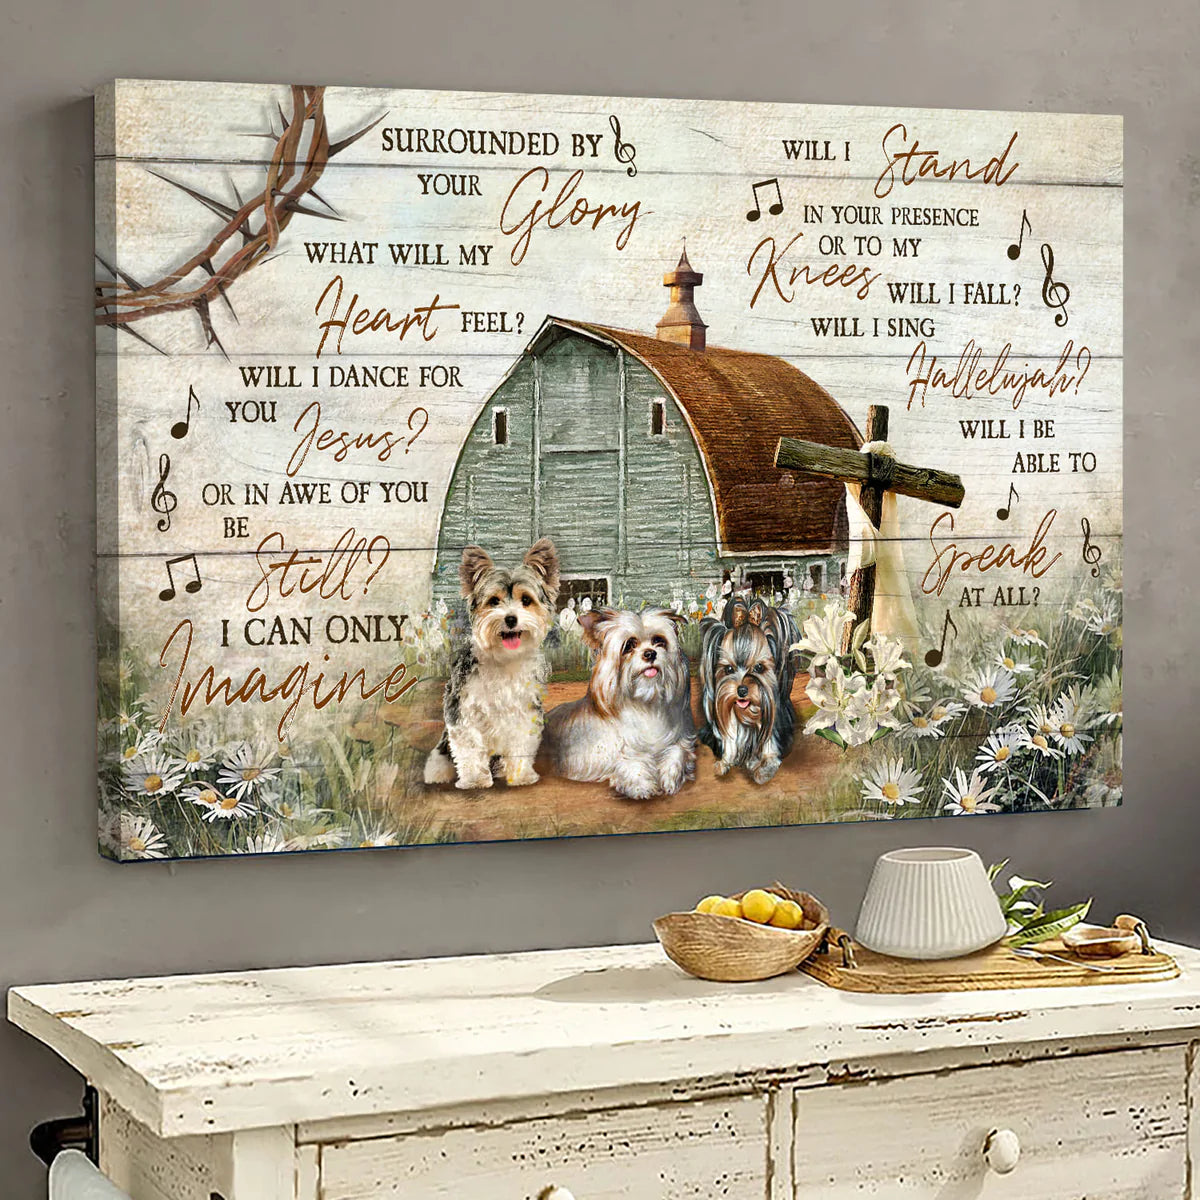 Yorkshire Terrier Dog Landscape Canvas - Yorkshire Terrier, Wooden Cross, Vintage House, Jesus Canvas - Gift for Yorkshire Terrier, Dog Lovers, Christian - I Can Only Imagine